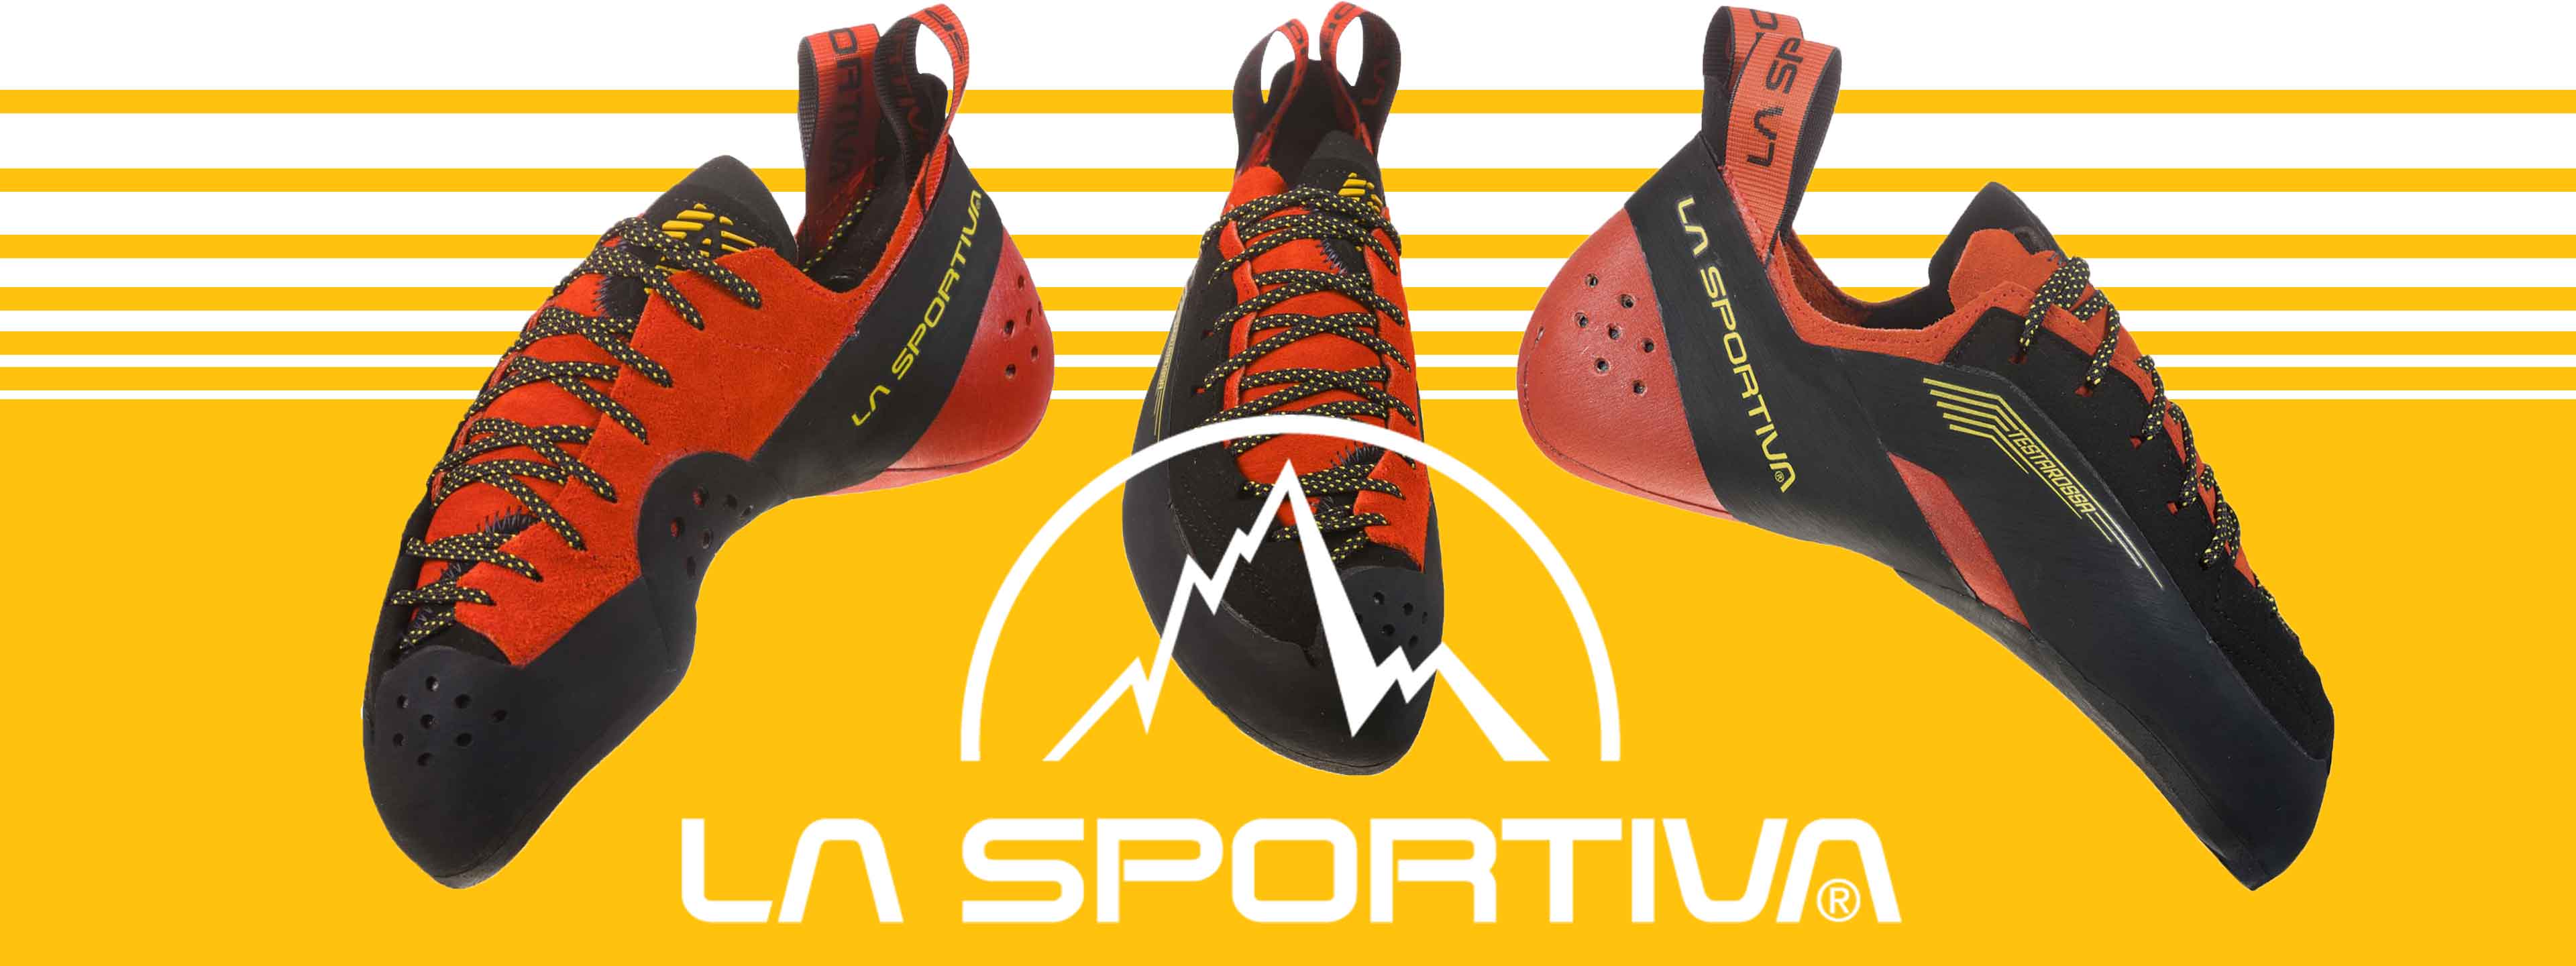 The new La Sportiva Testarossa rock climbing shoe